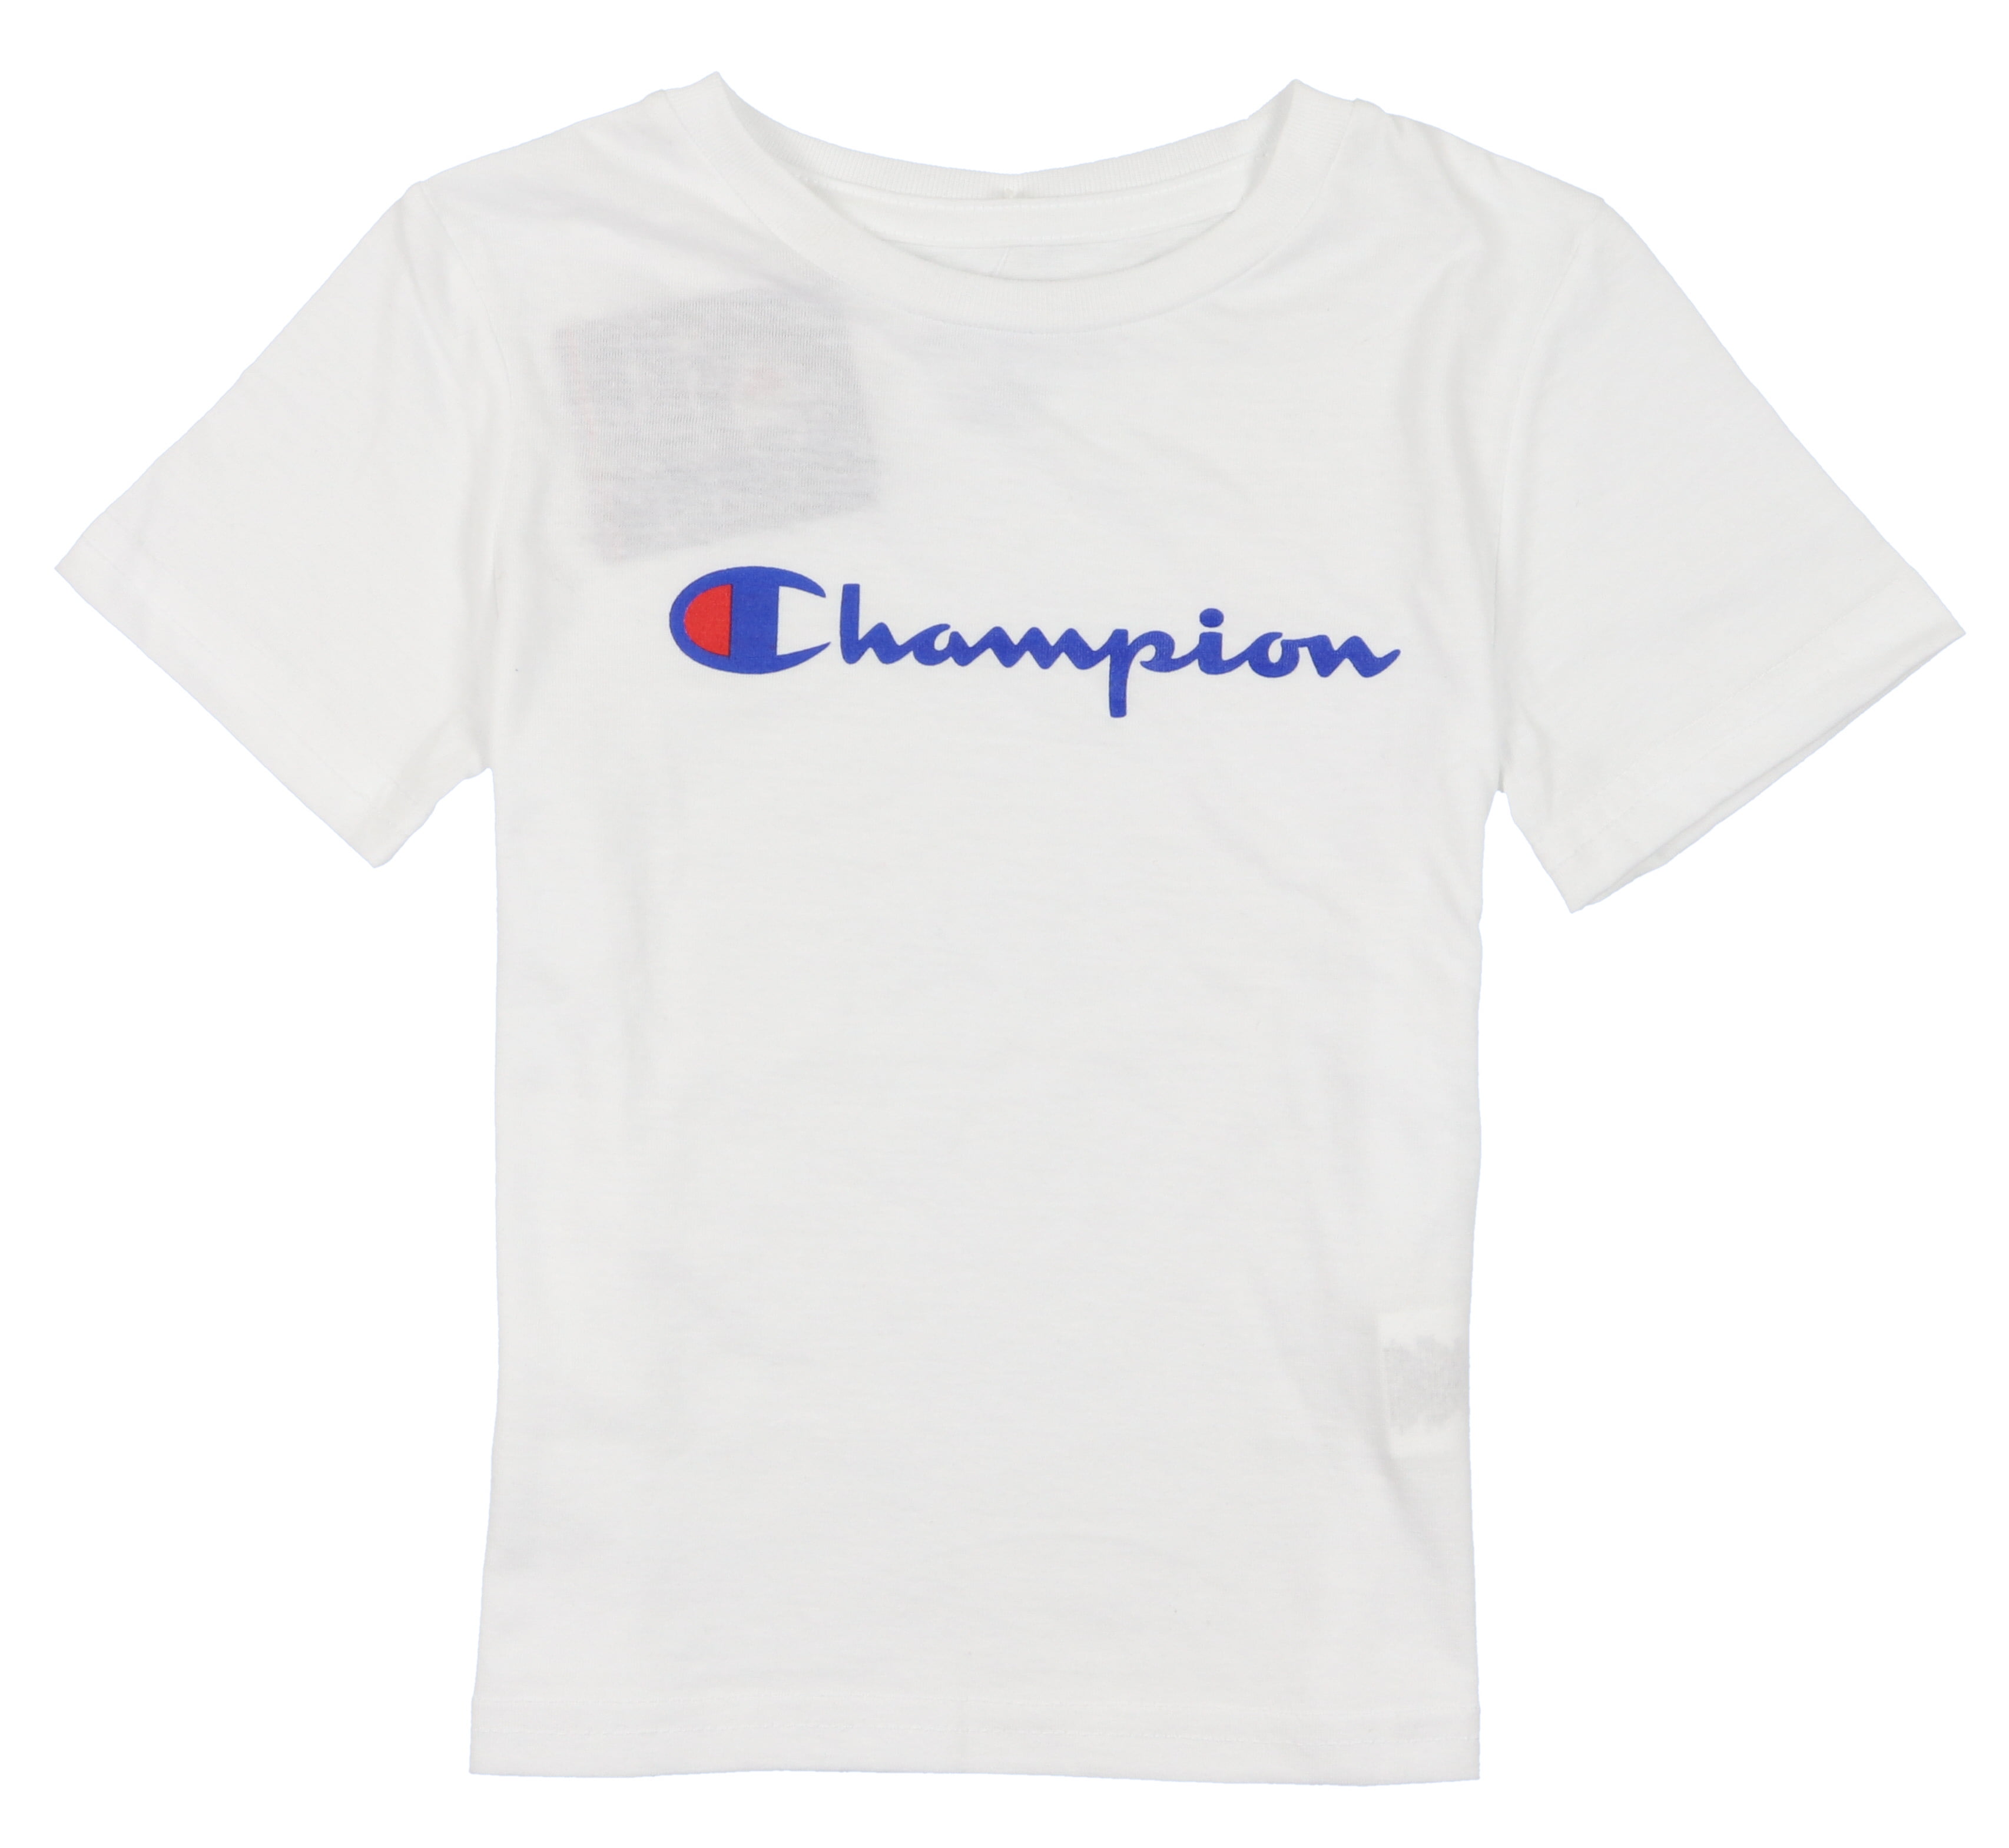 3t champion shirt